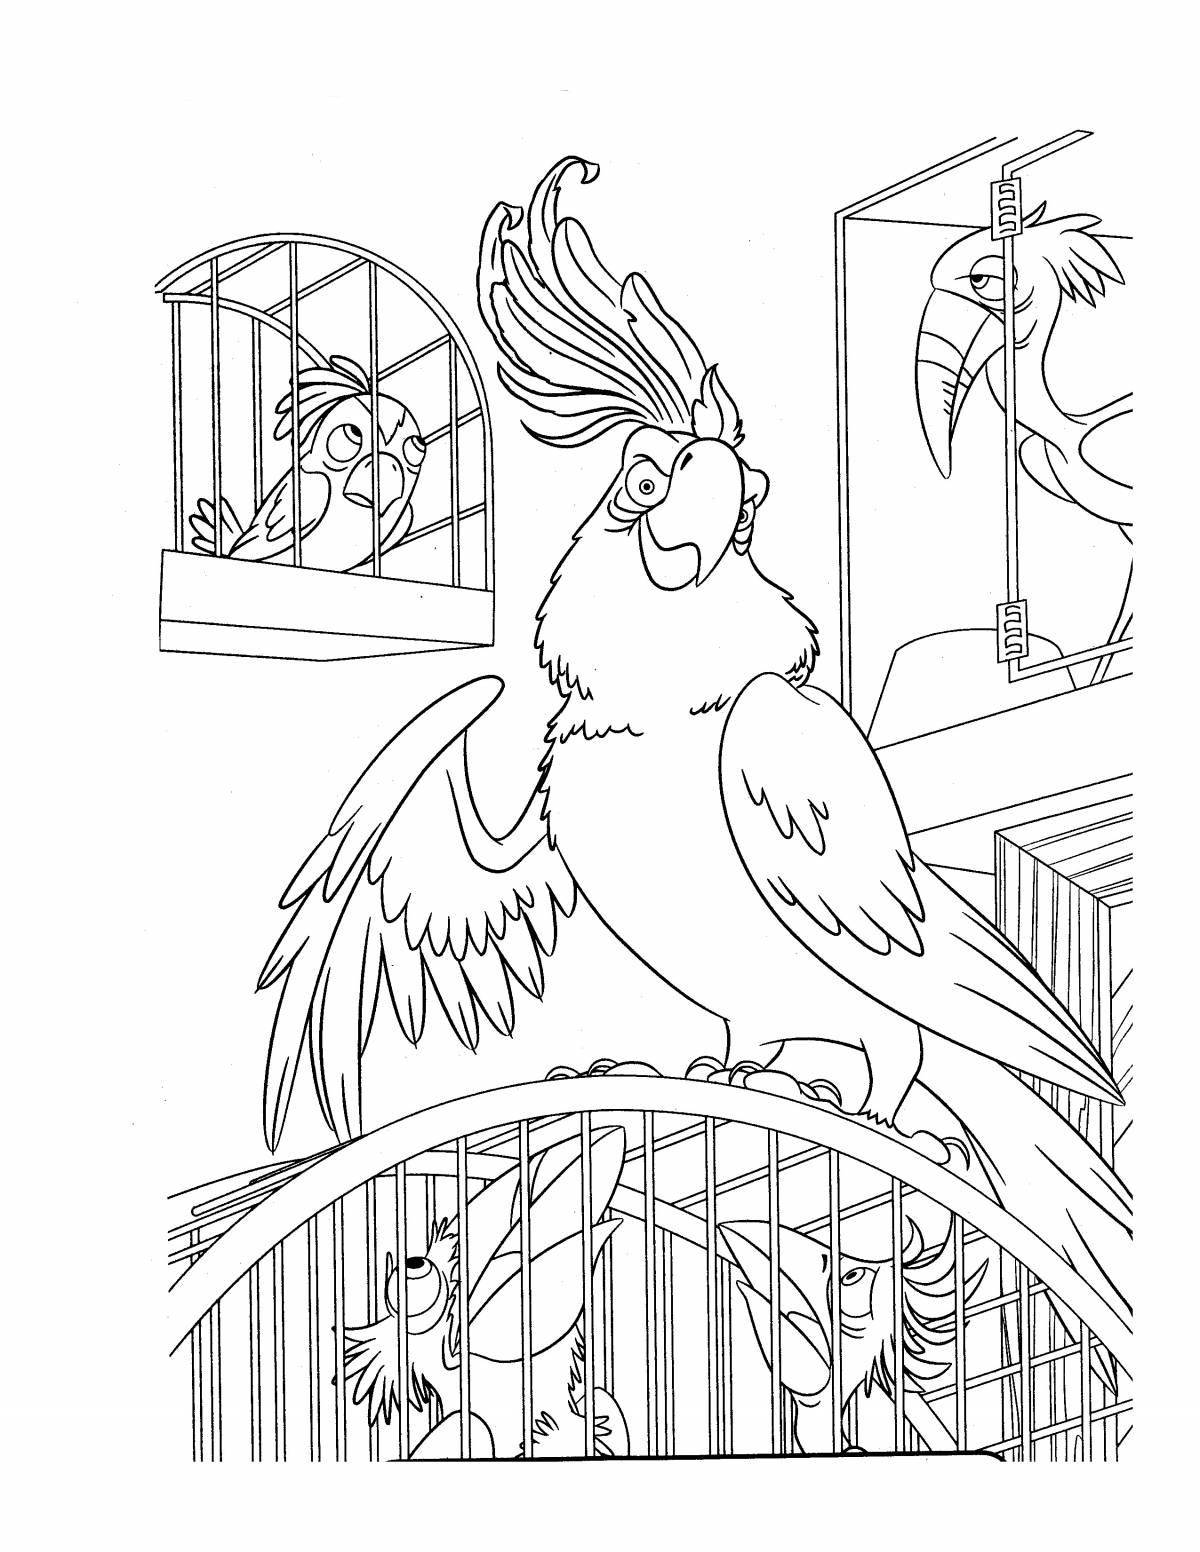 Exquisite caged parrot